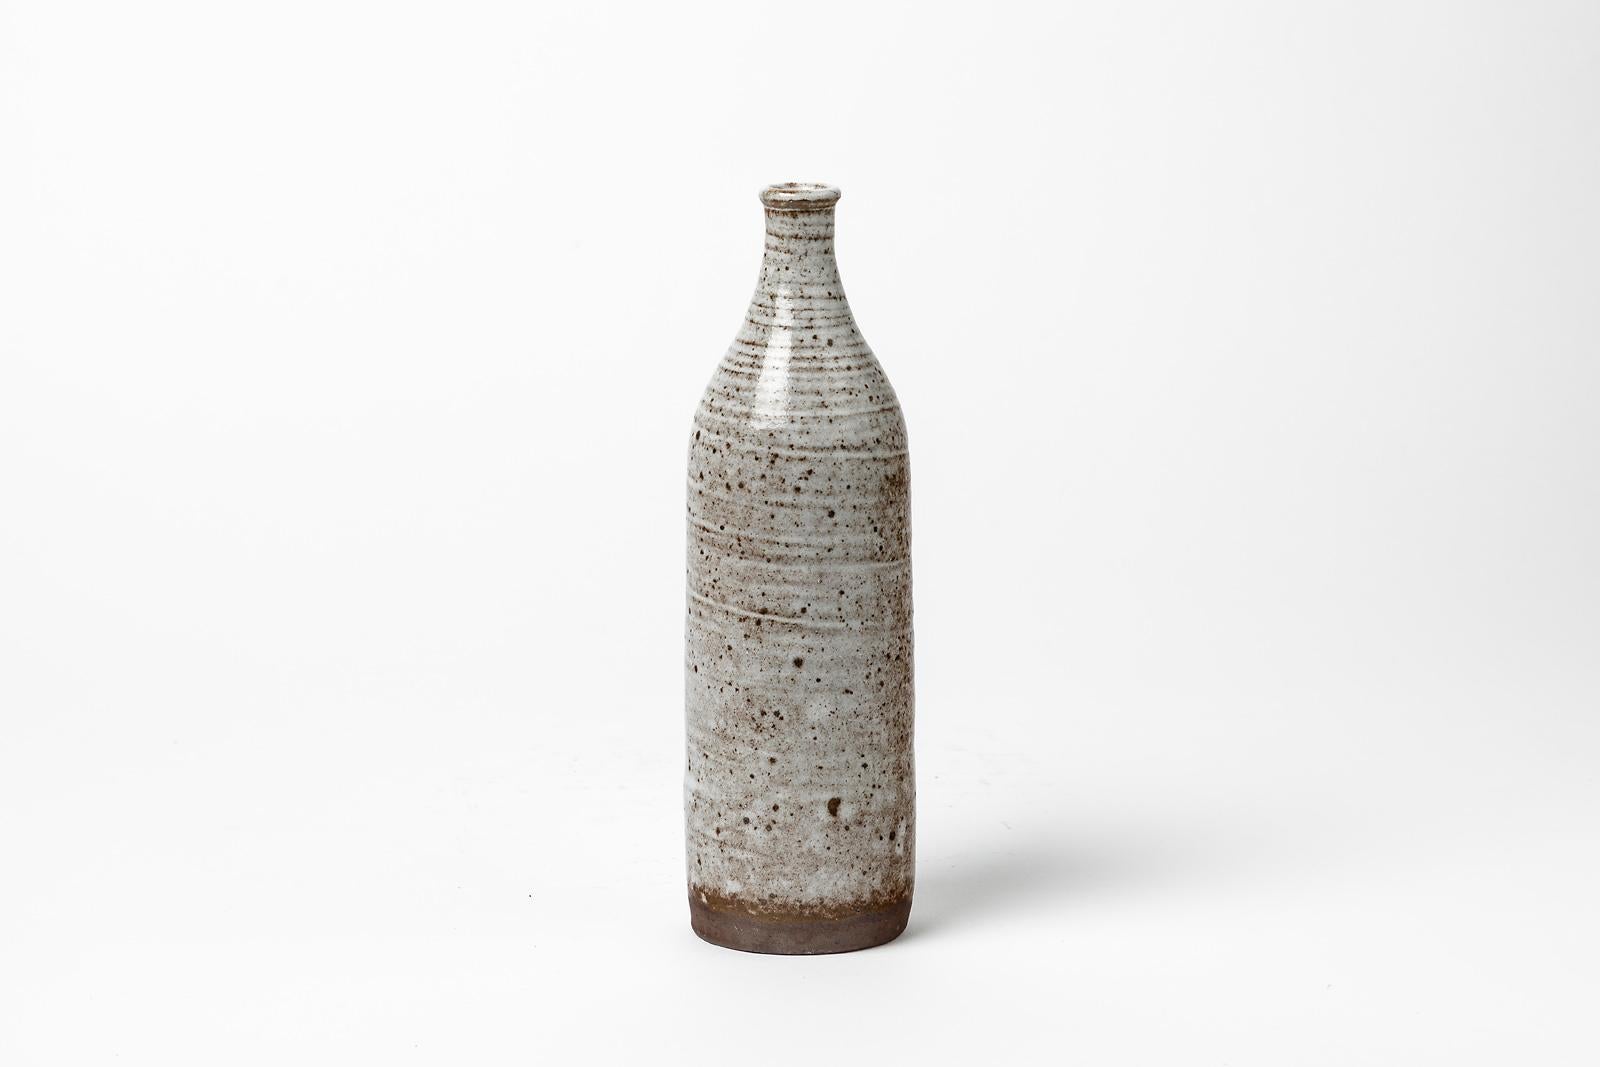 Mid-Century Modern White Stoneware Ceramic Bottle Vase by Pol Chambost in Ratilly 1976 Design For Sale